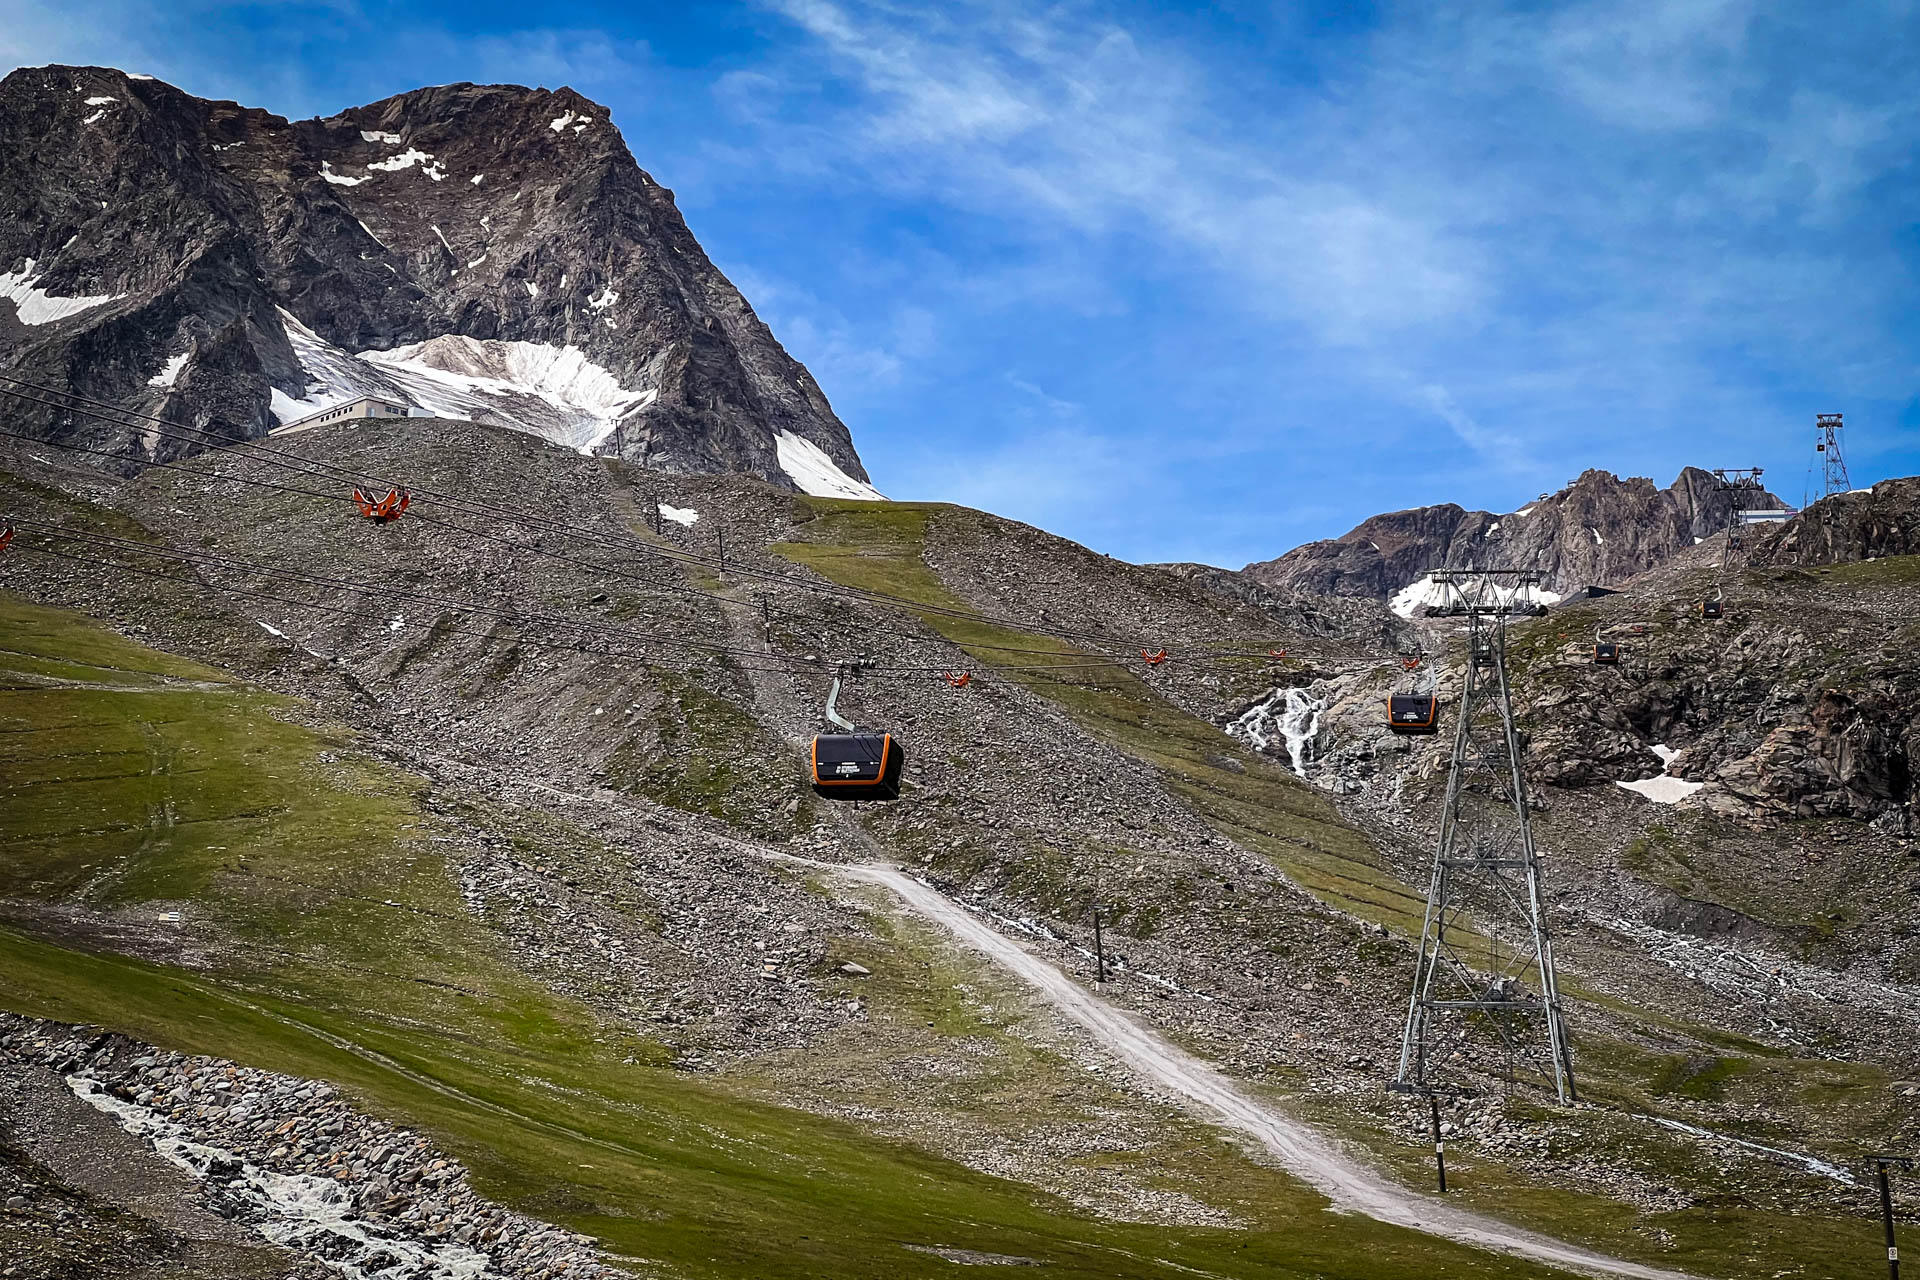 Galeria: Letni trekking na lodowiec Stubai